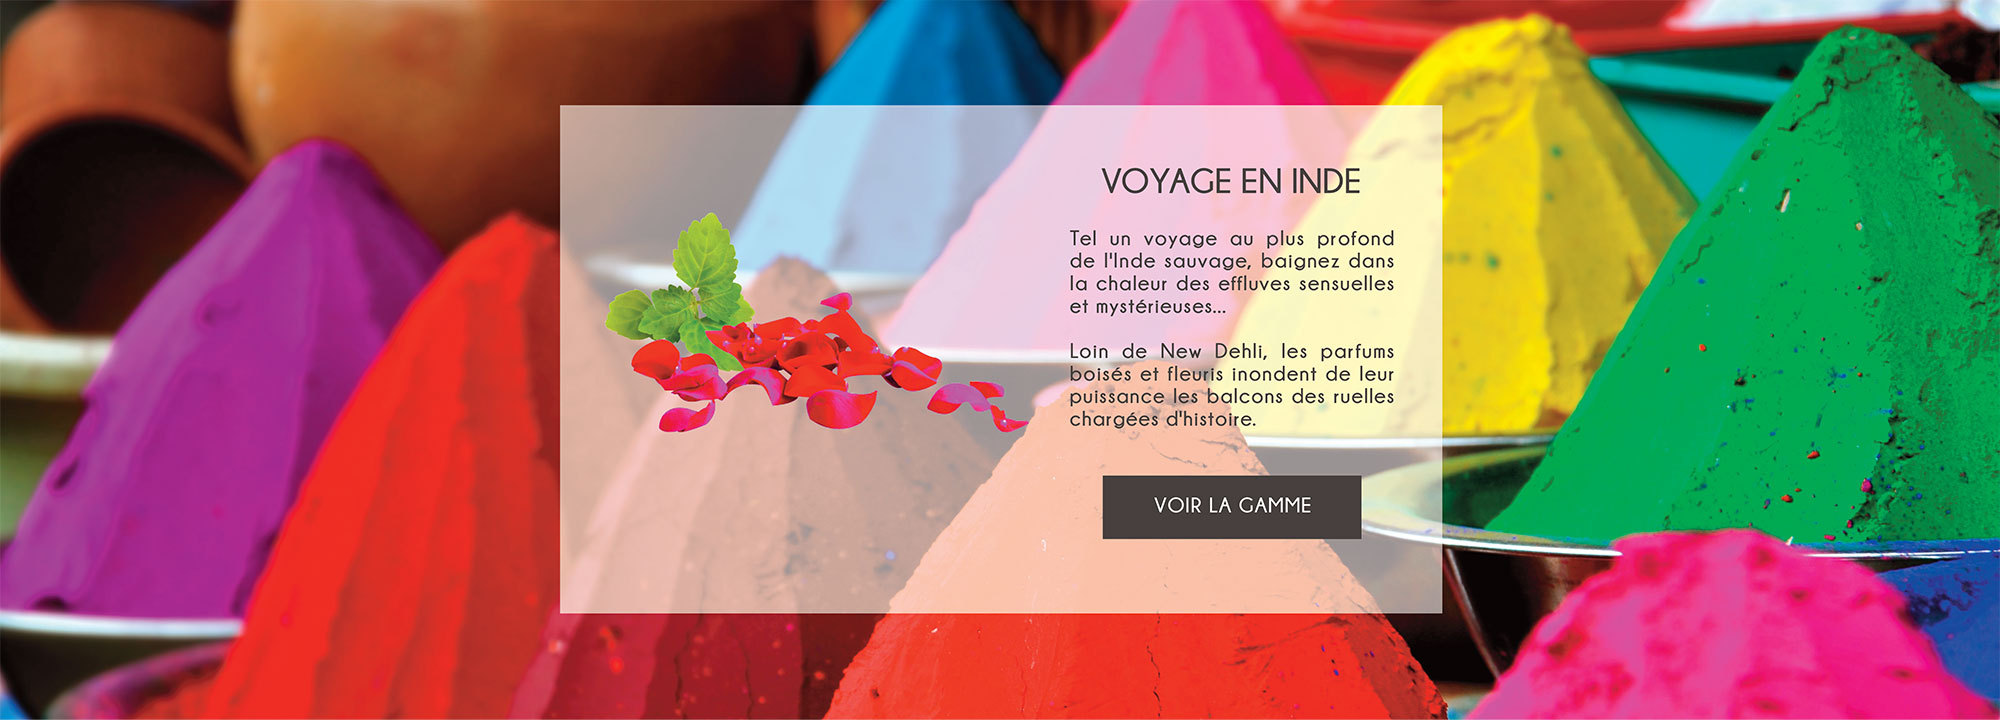 Parfum d'Ambiance Voyage en Inde - Senteur Voyage en Inde - L'esprit Chic